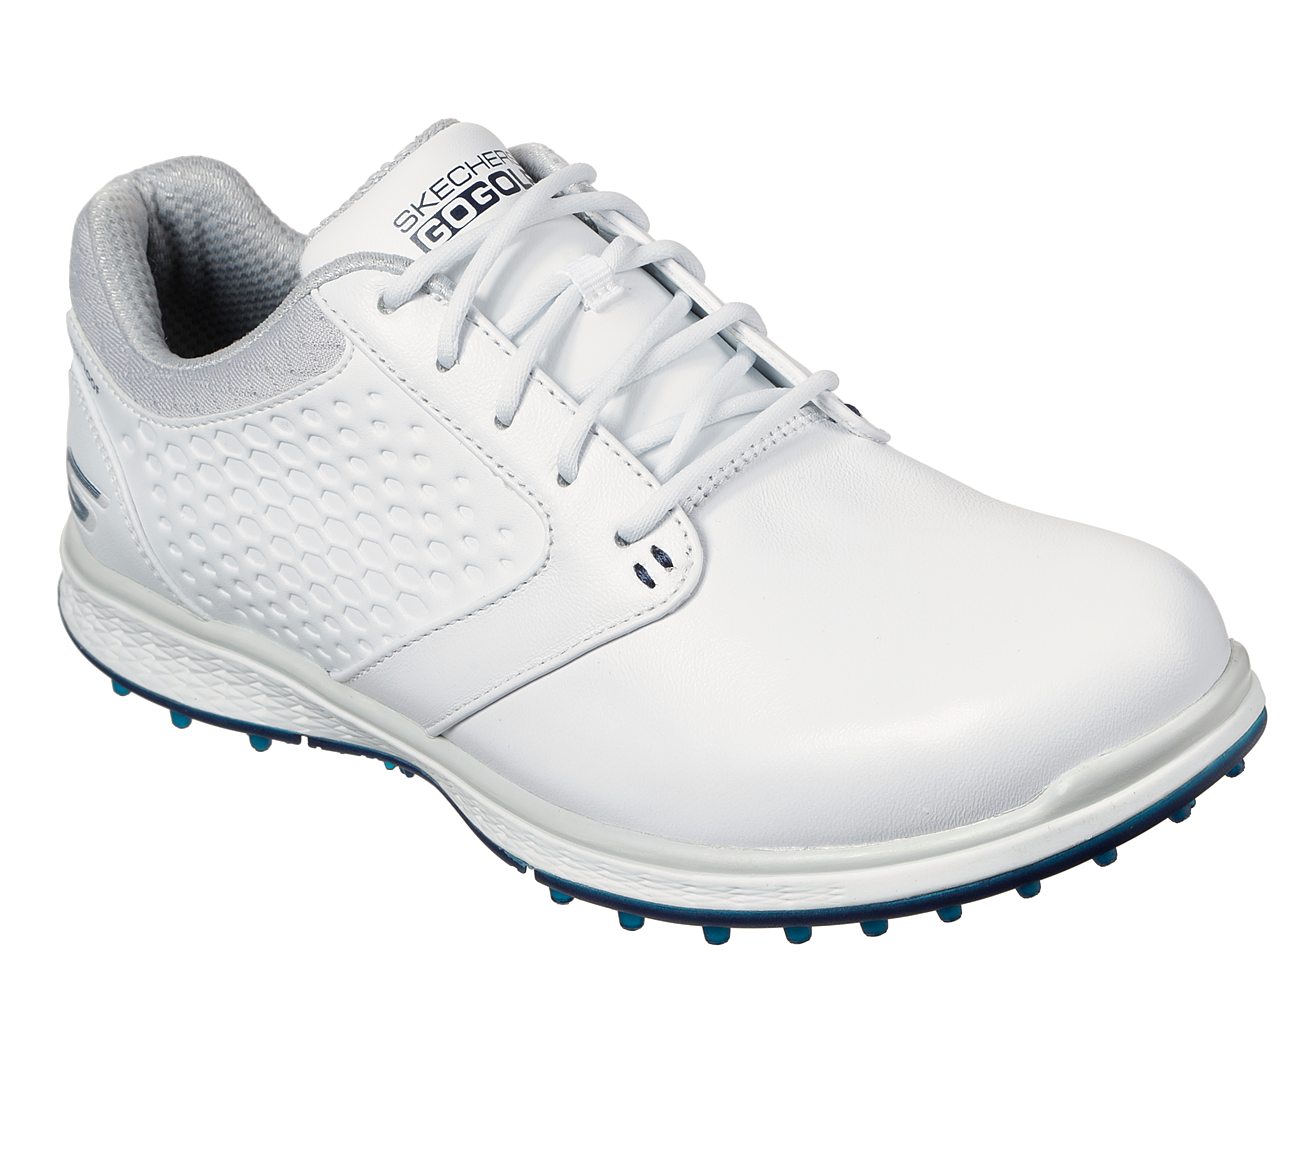 skechers golf shoes go golf elite v3